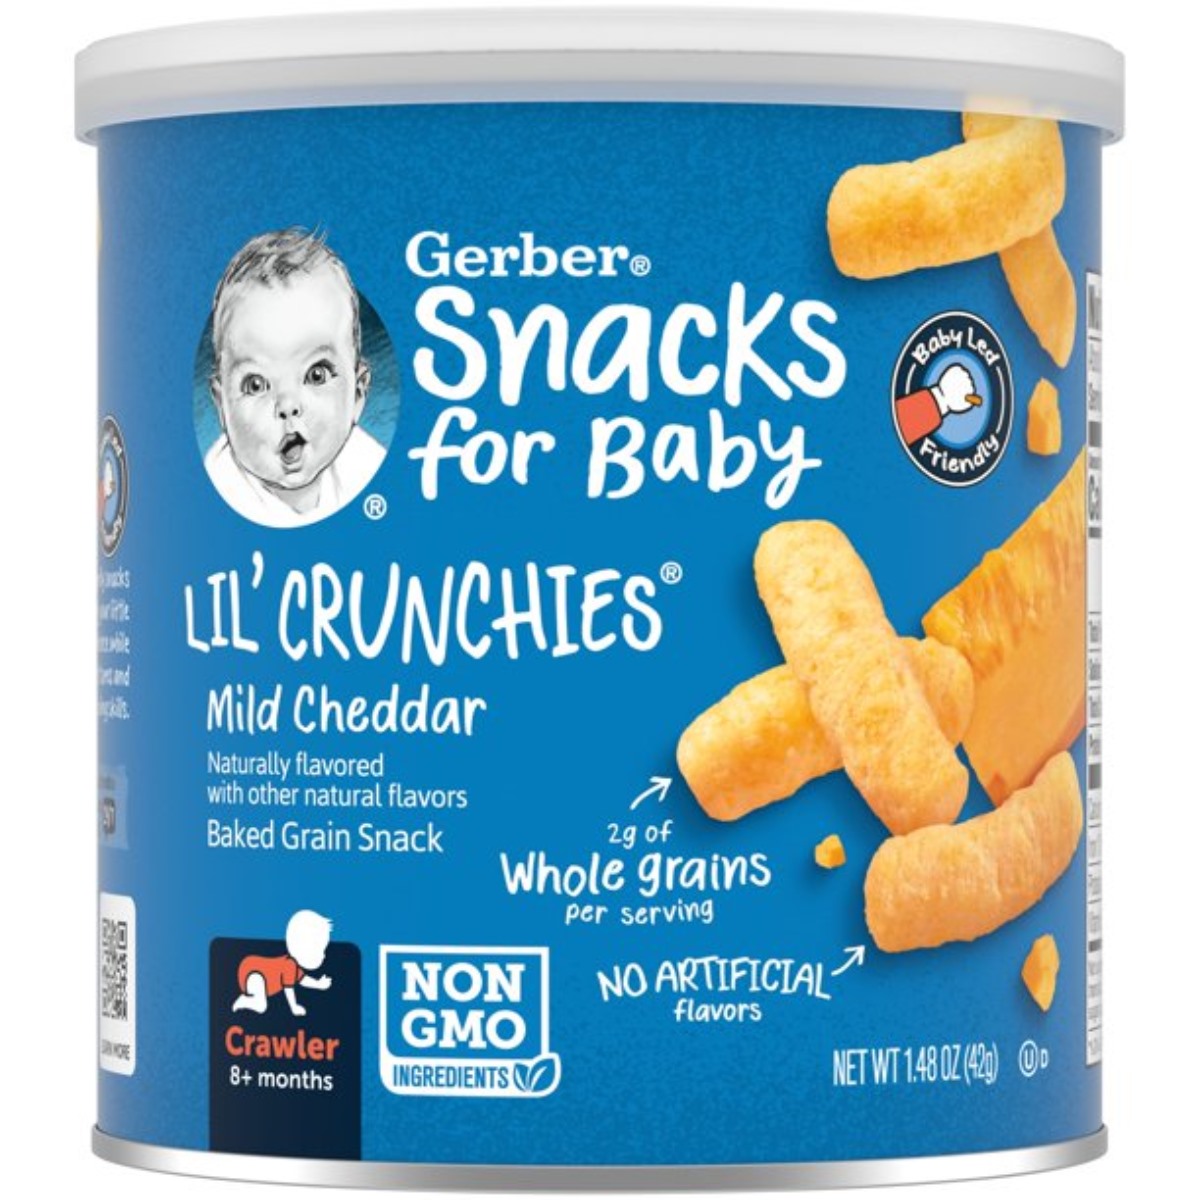 Gerber Snacks for Baby, Lil Crunchies (1.48oz) - Mild Cheddar